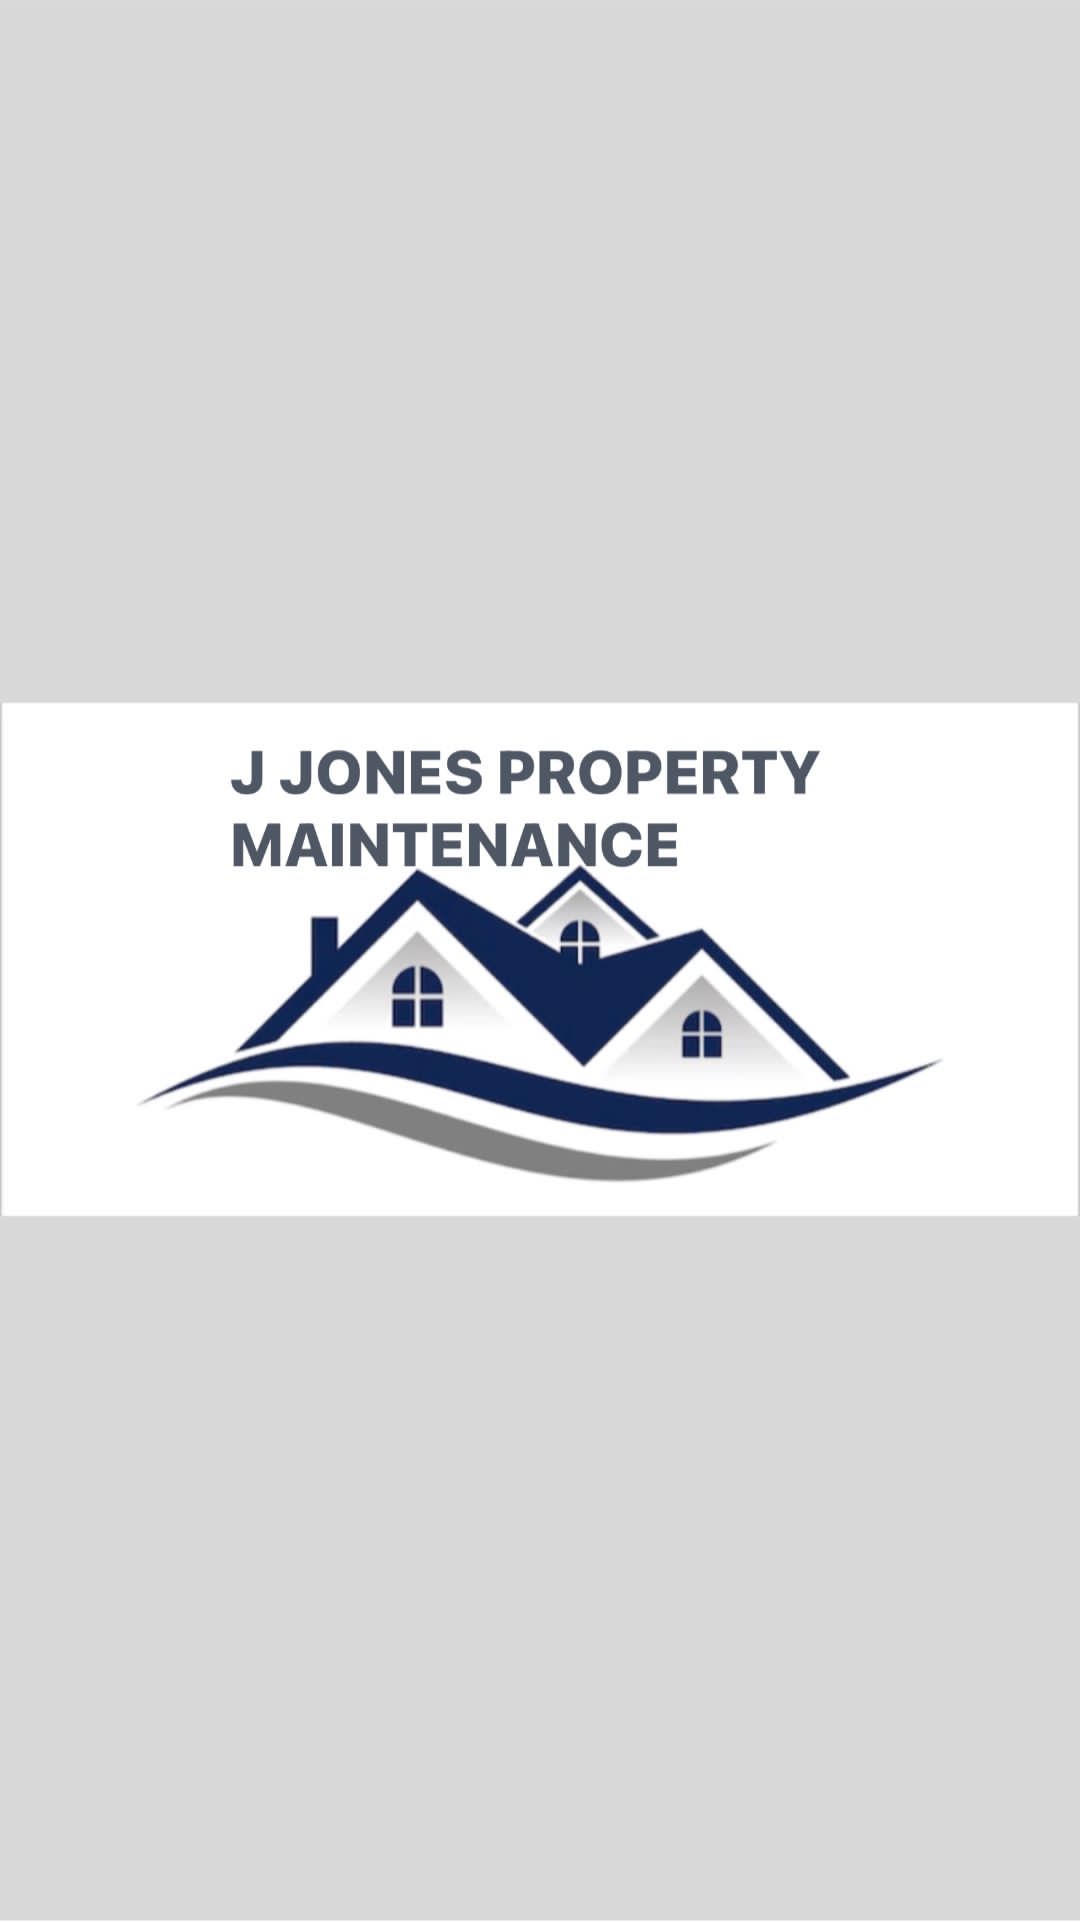 Main header - "J Jones Property Maintenance"